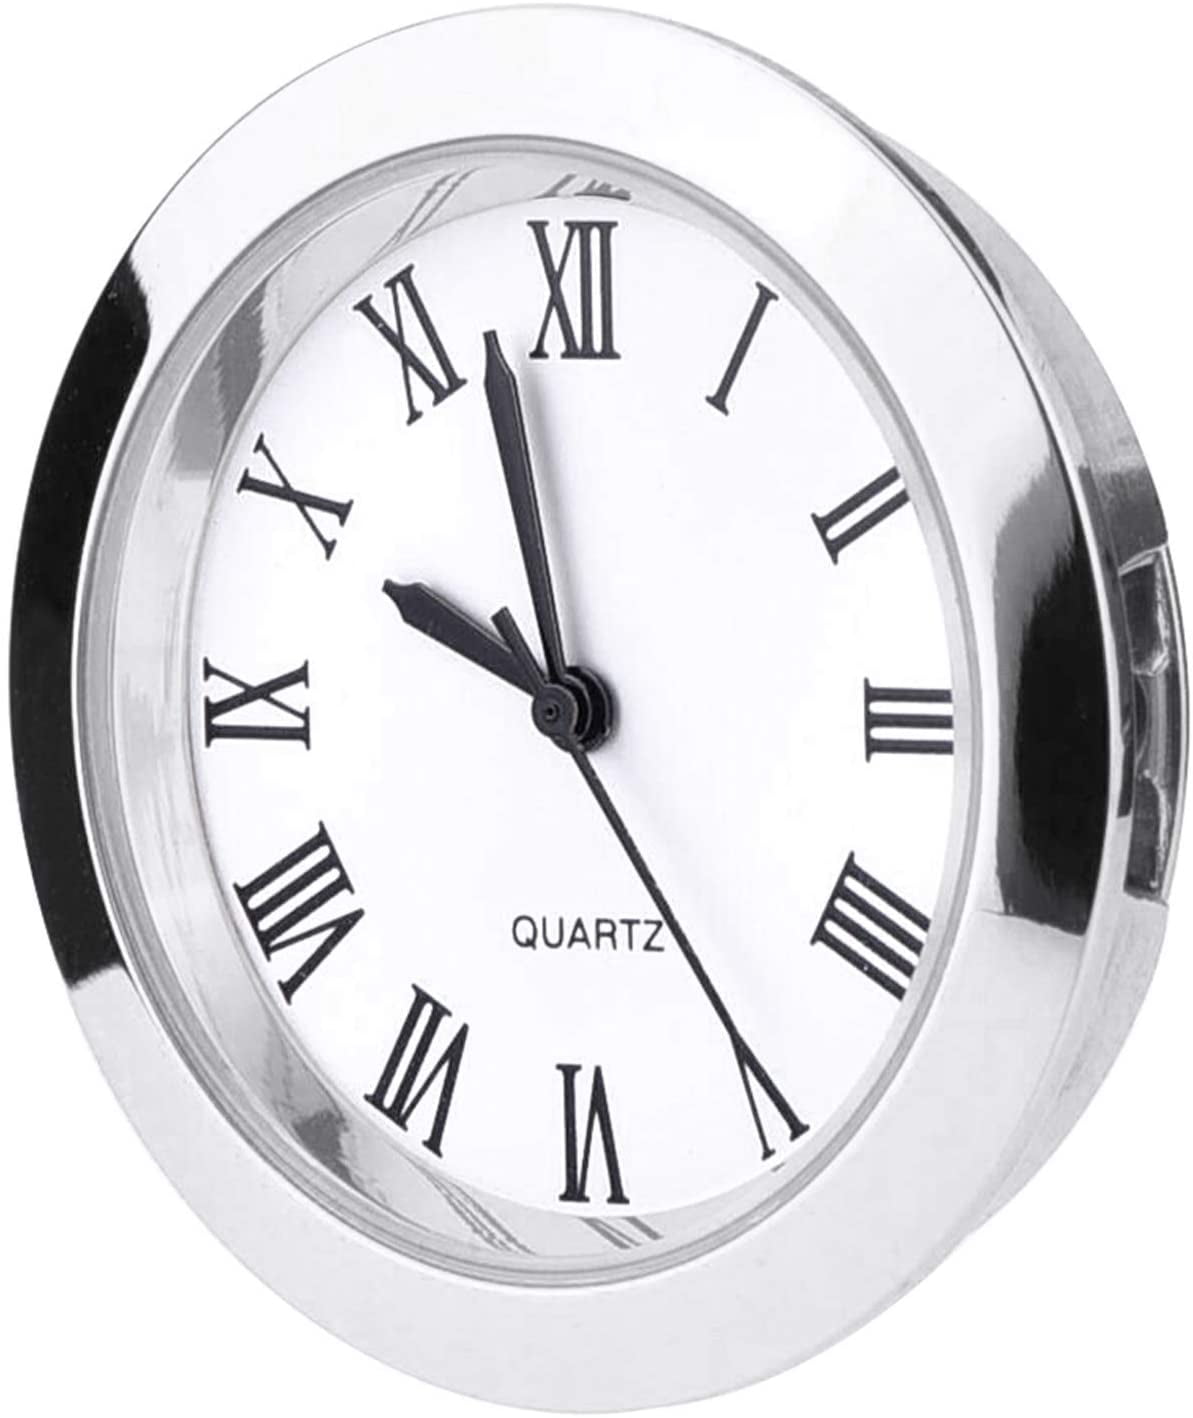 Insertion Clock 70mm Quartz Acctim Gold bezel white Roman Dial 